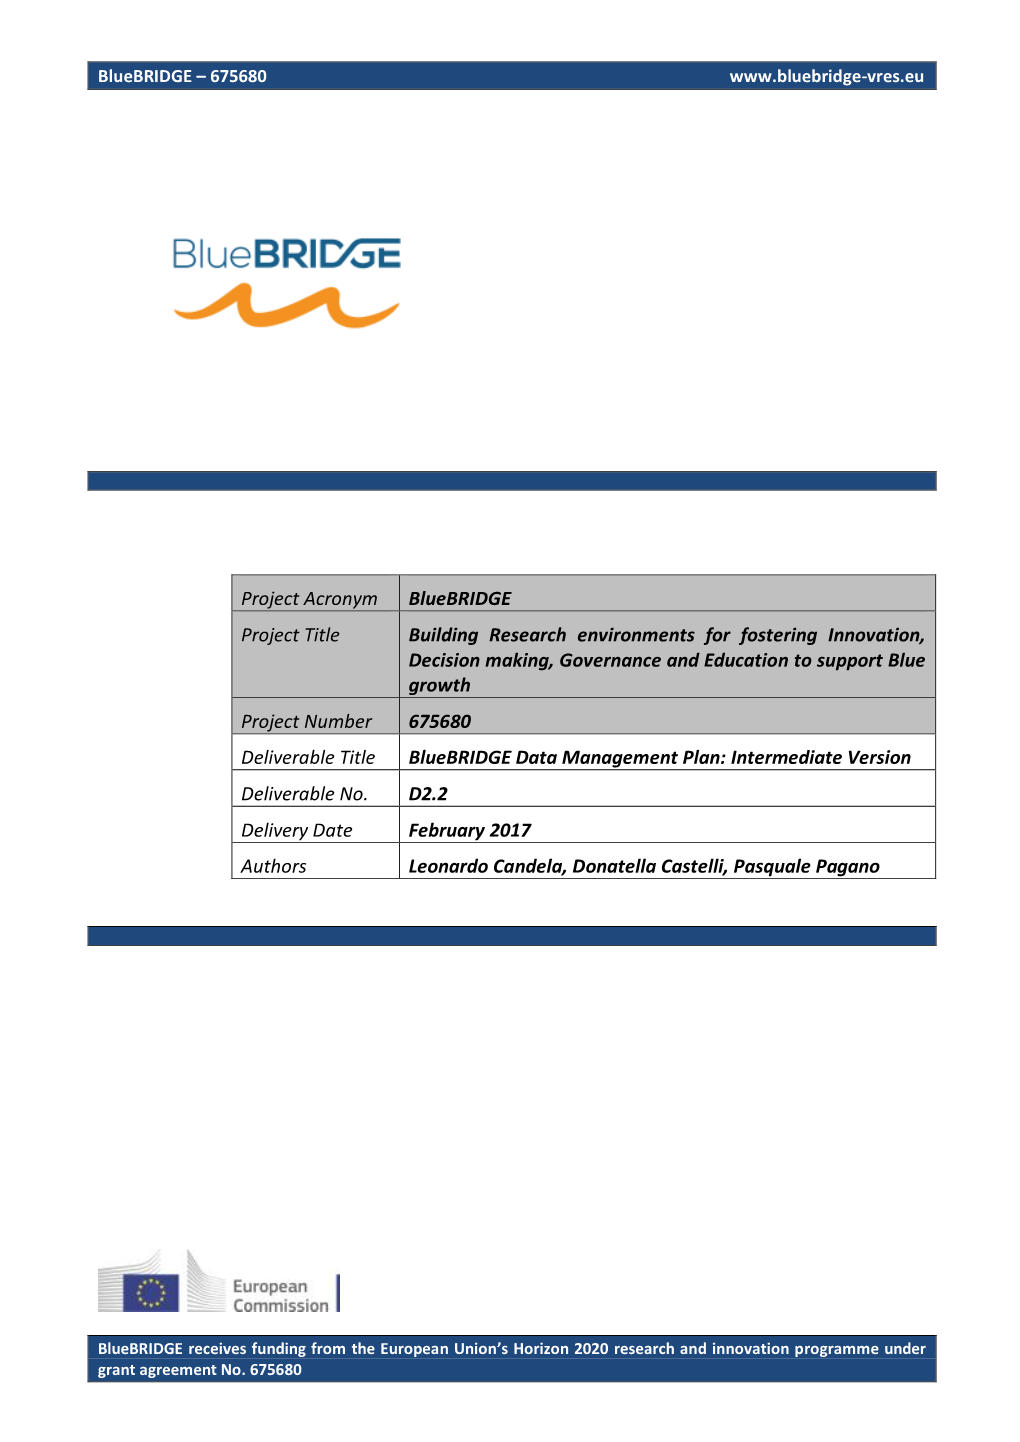 Bluebridge Data Management Plan: Intermediate Version Deliverable No